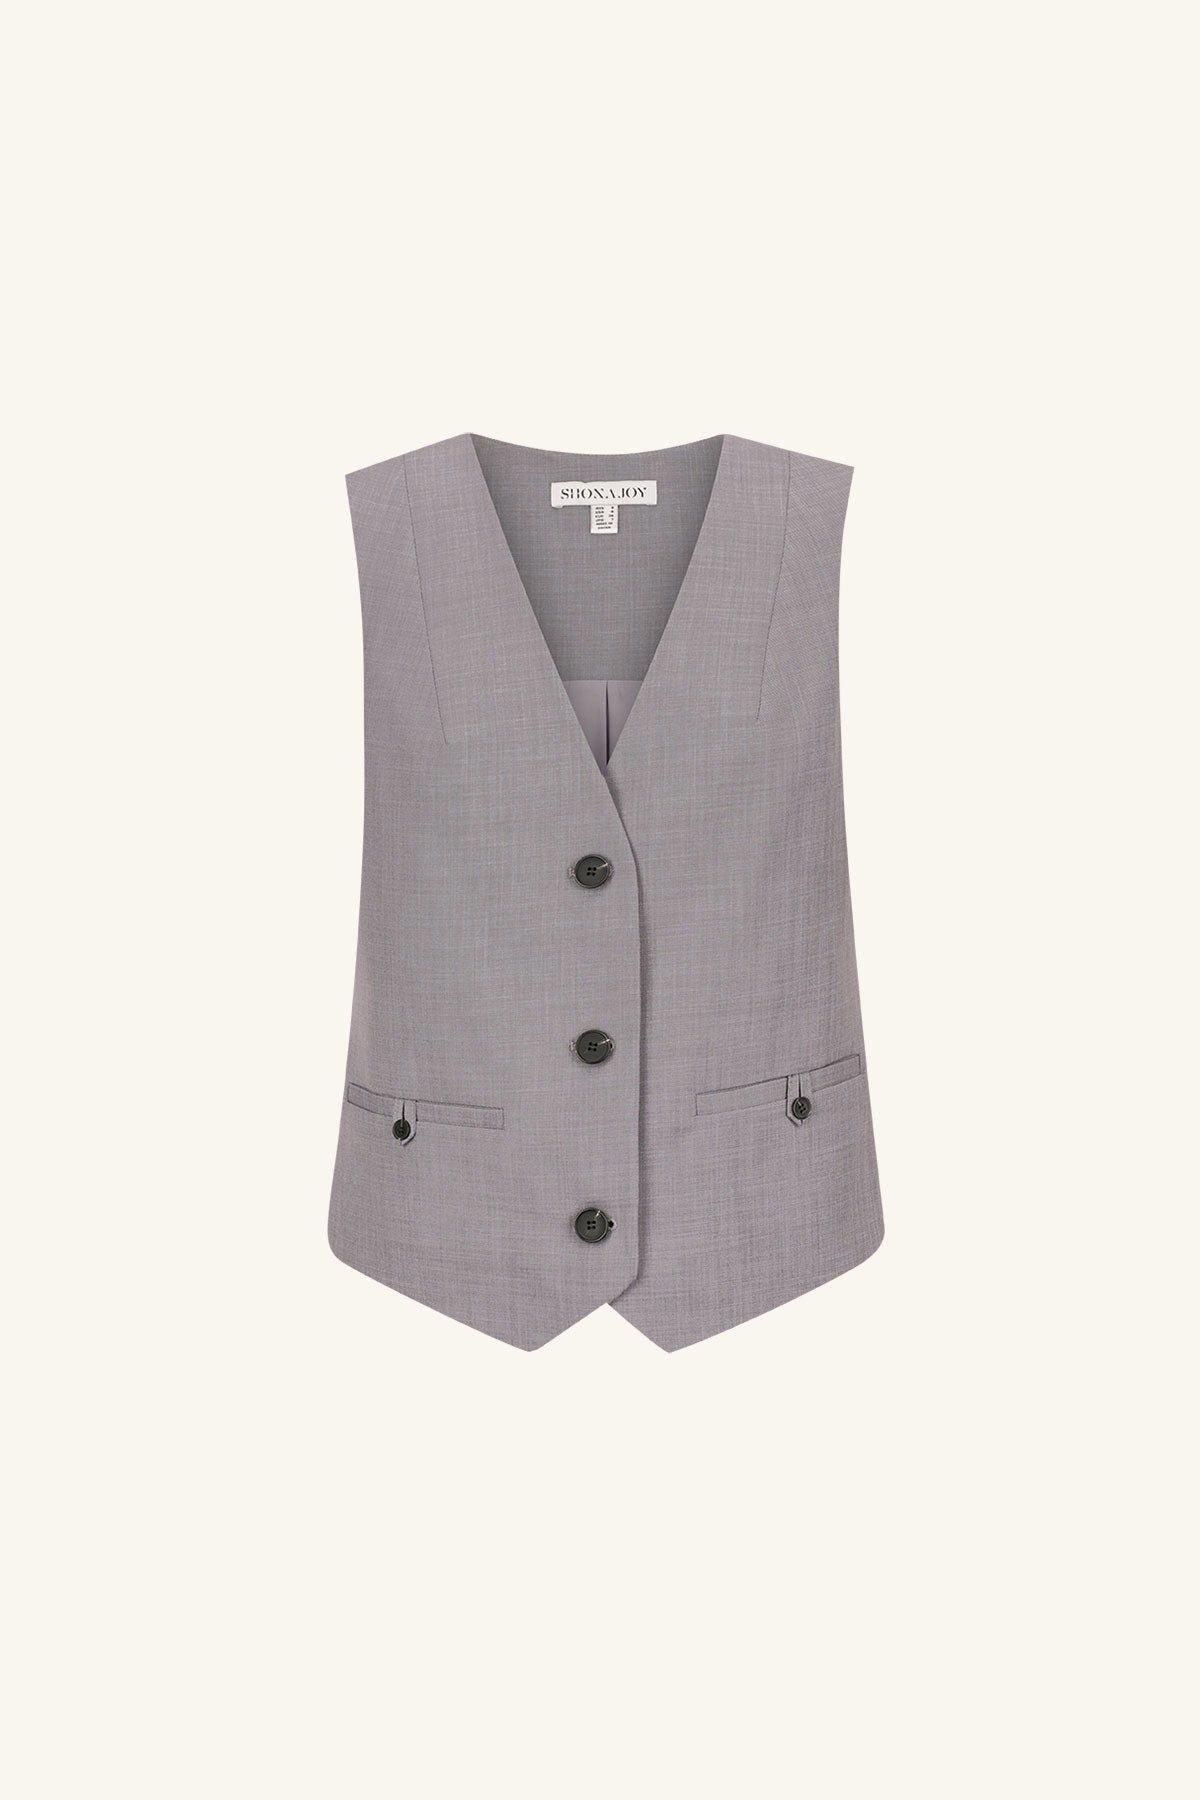 Asher Oversized Tailored Vest // Steel Grey